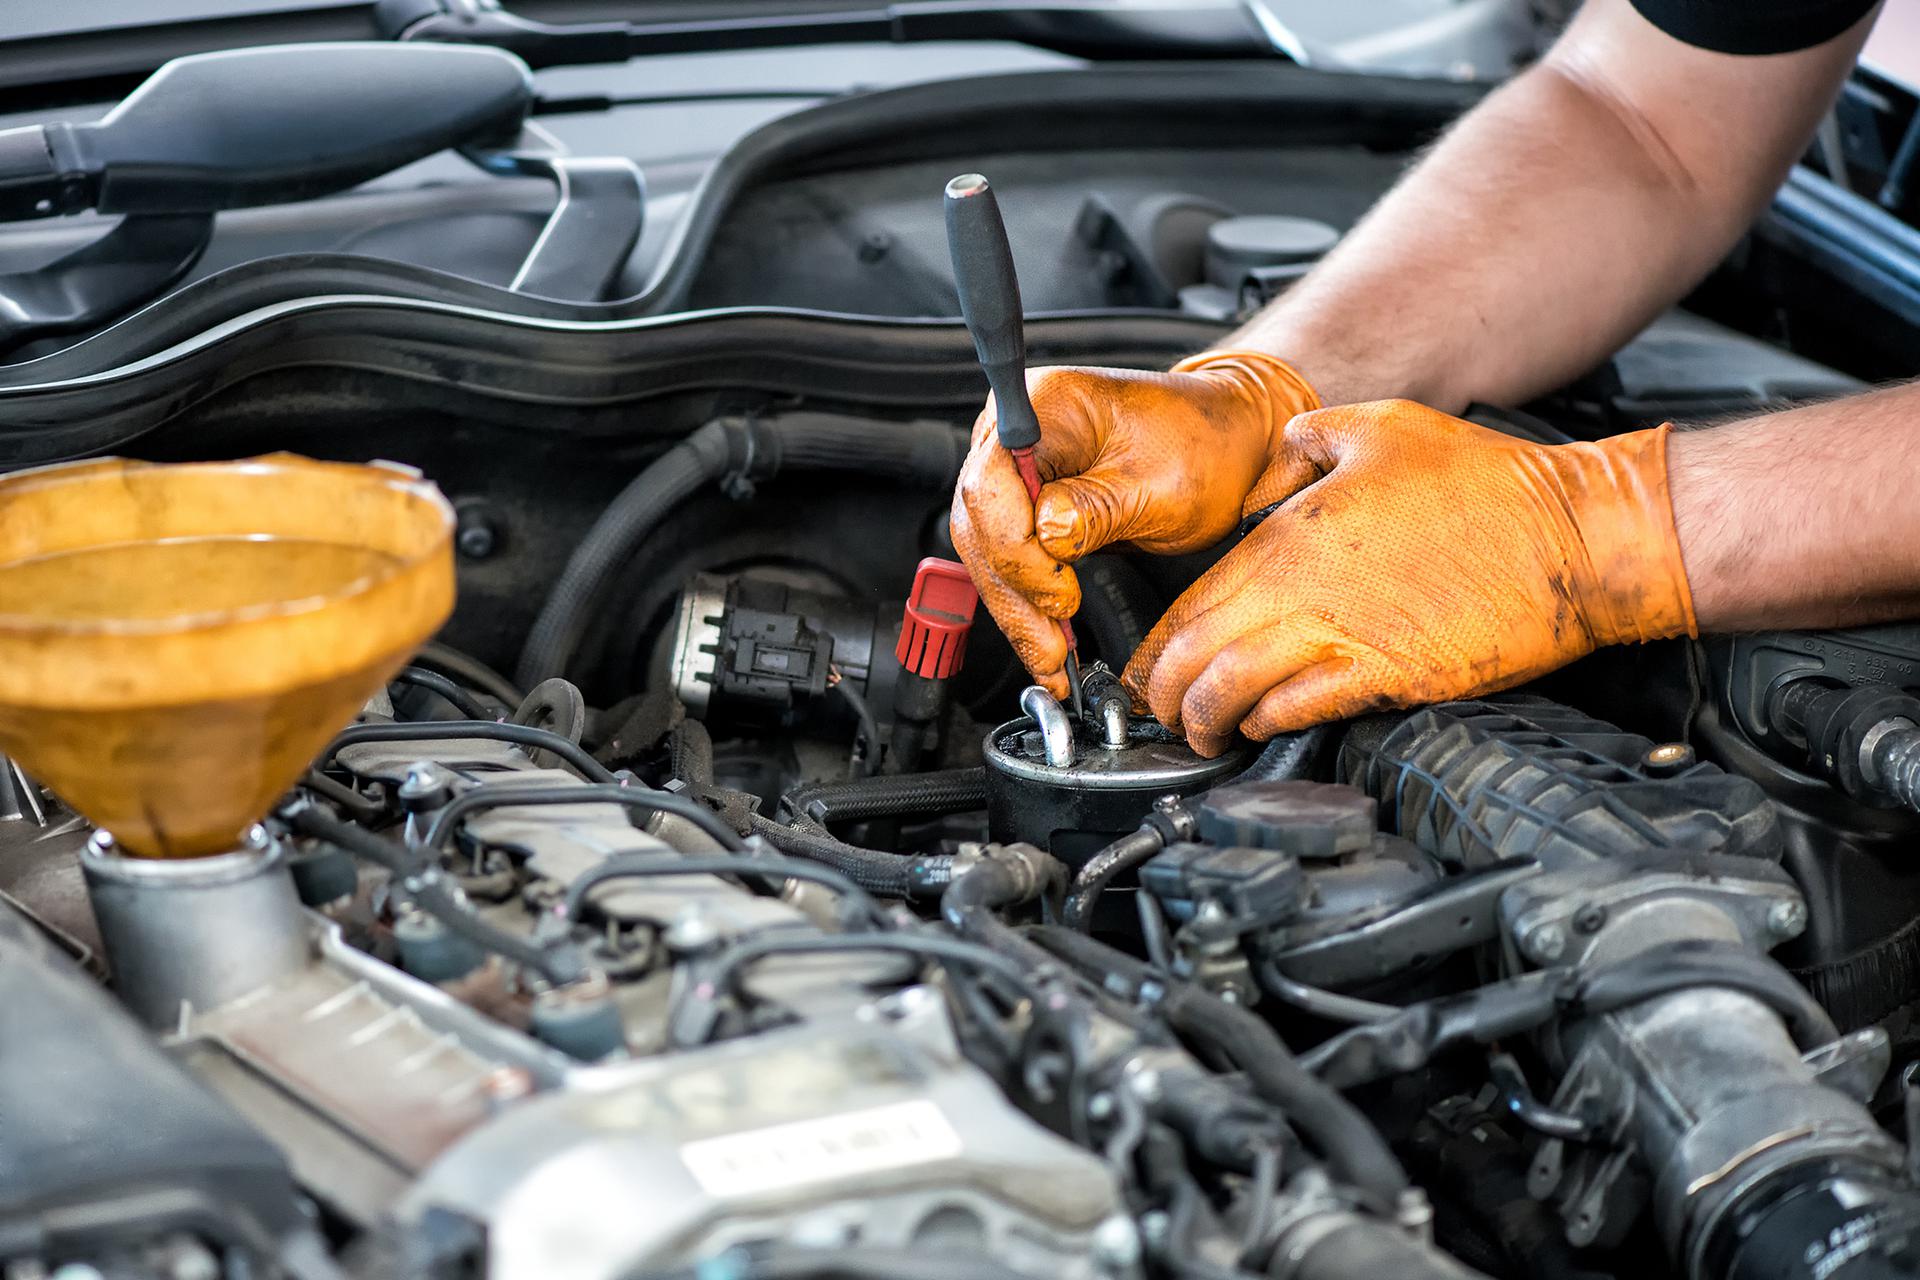 RPH Motor Repairs - Vehicle Repairs Shutterstock 298682093 Car Repair Engine Vehicle Automotive Employment Garage Mechanic Workshop HanDs